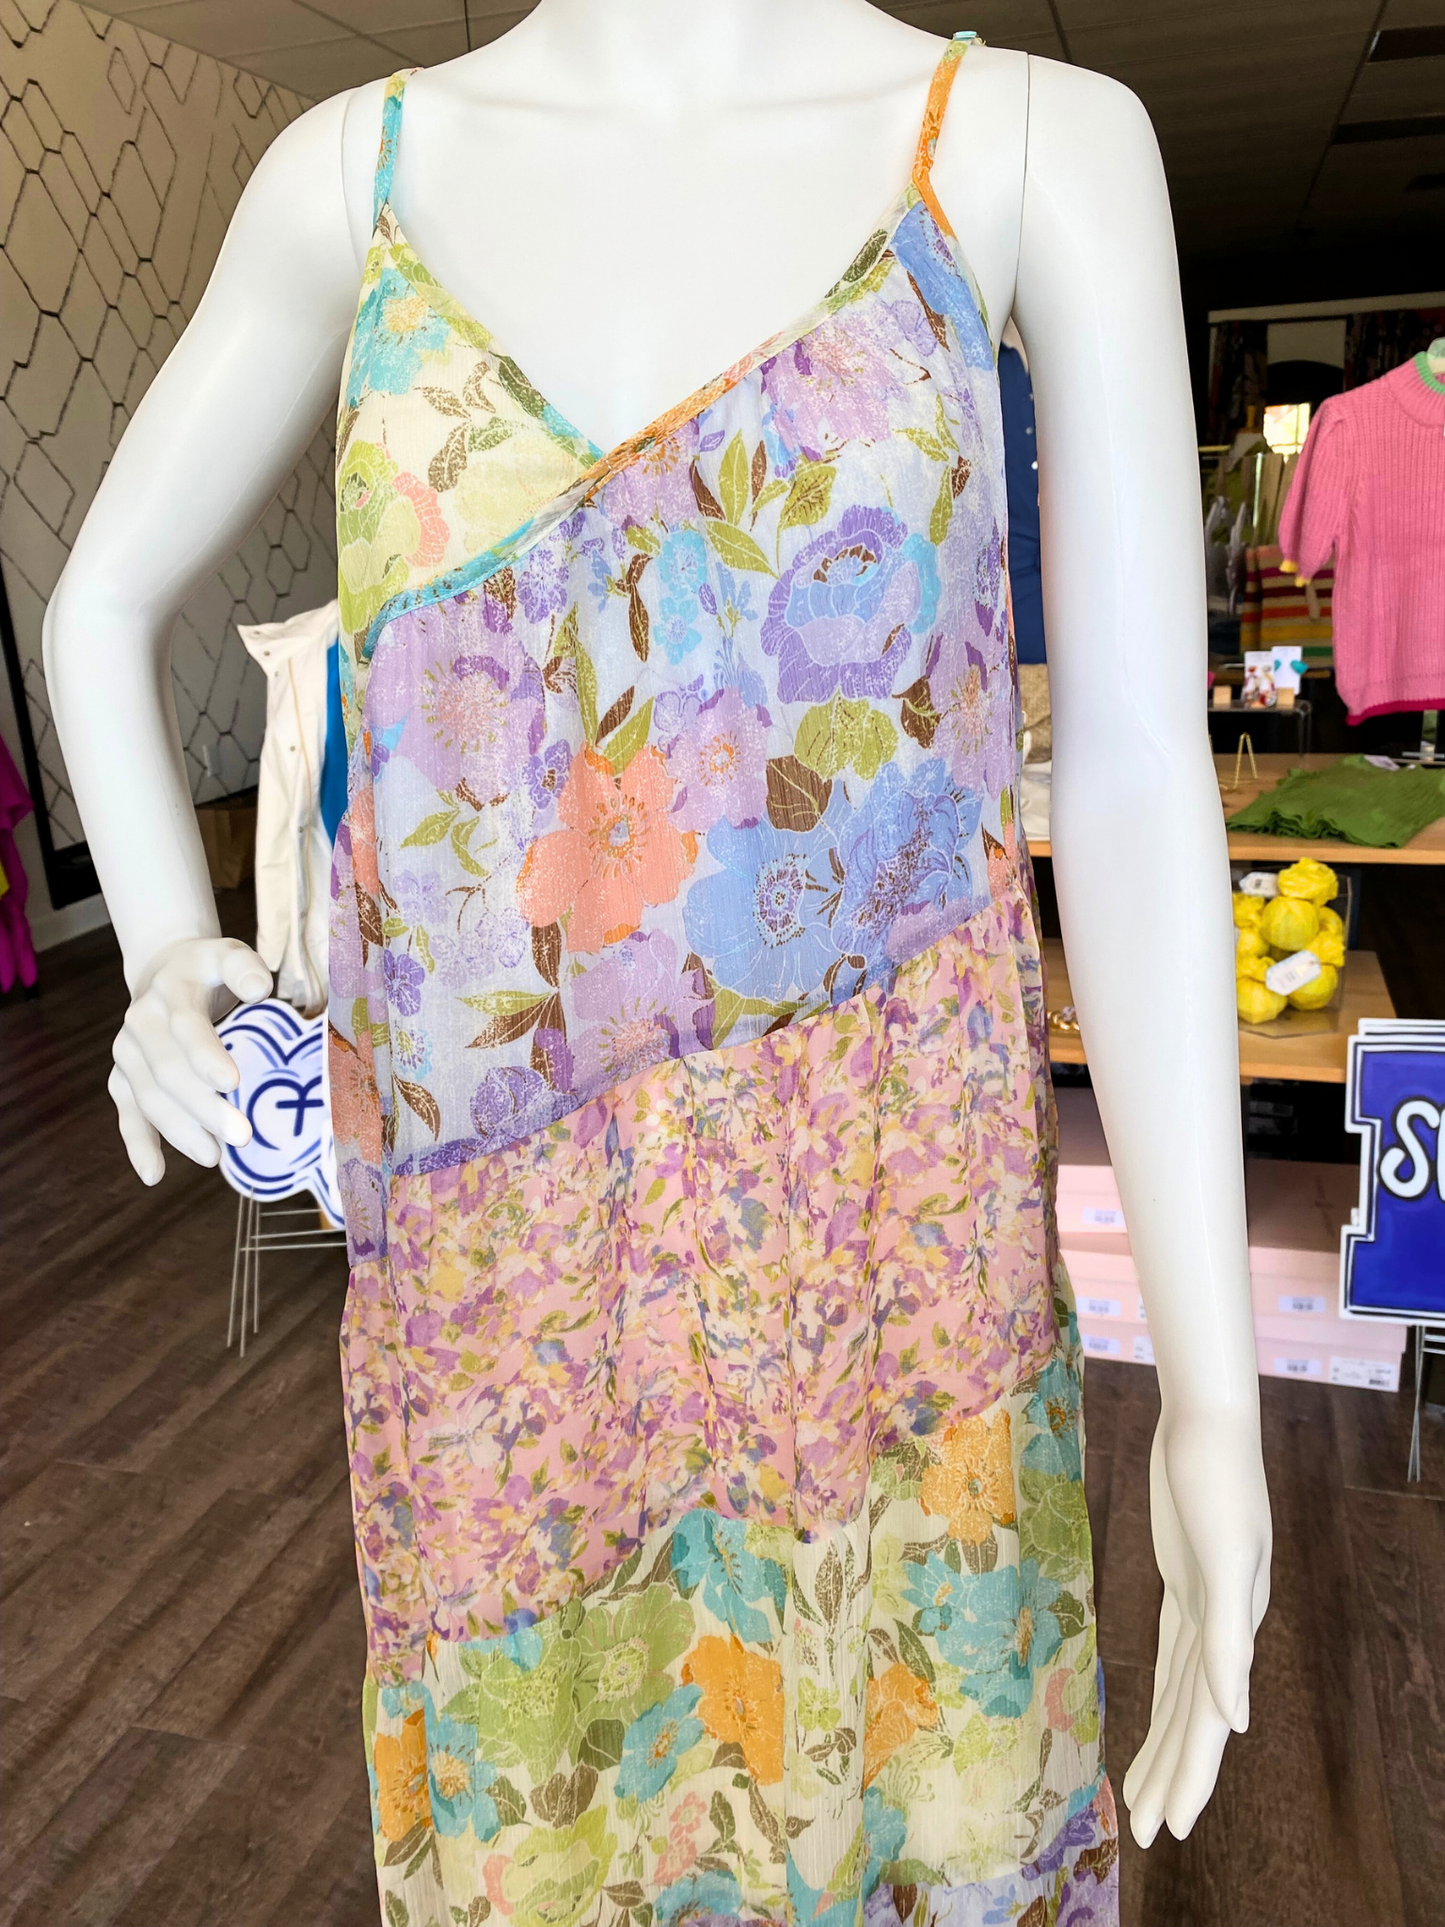 Spring Printed Maxi Dress